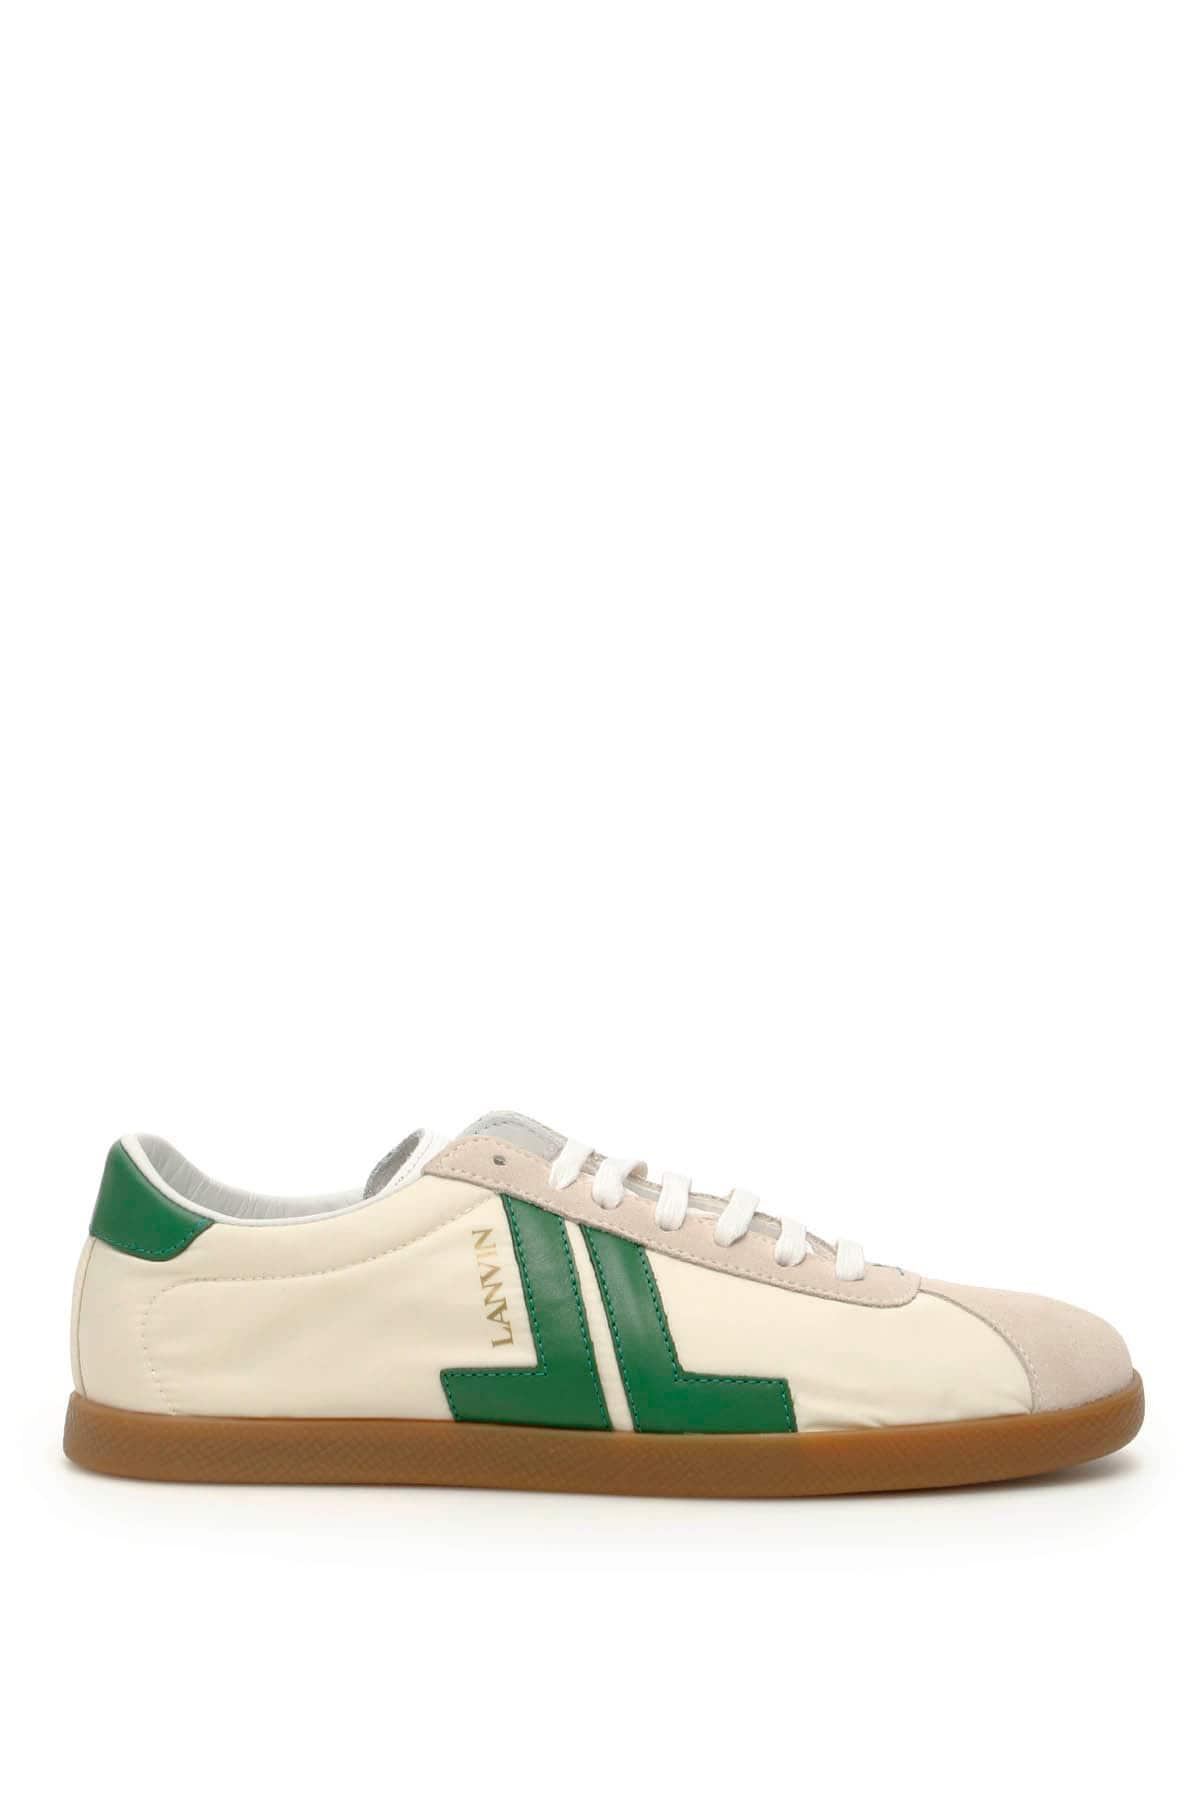 Lanvin Jl Leather Sneakers in White,Green (Green) - Lyst